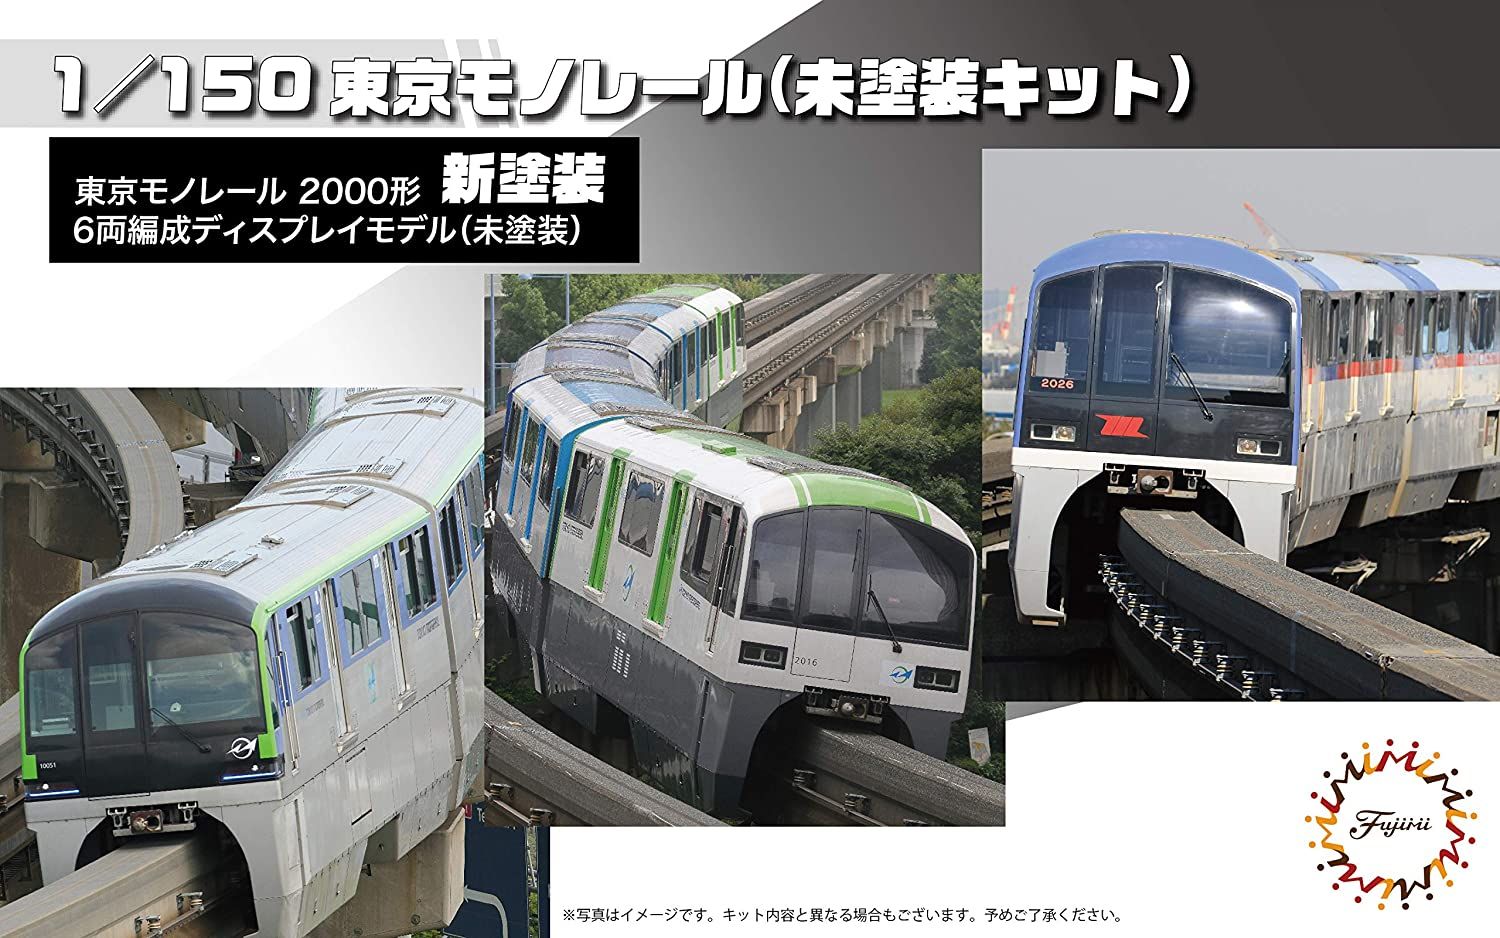 Fujimi Tokyo Monorail Type 2000 New Color Six Car Formation Display Mod - BanzaiHobby